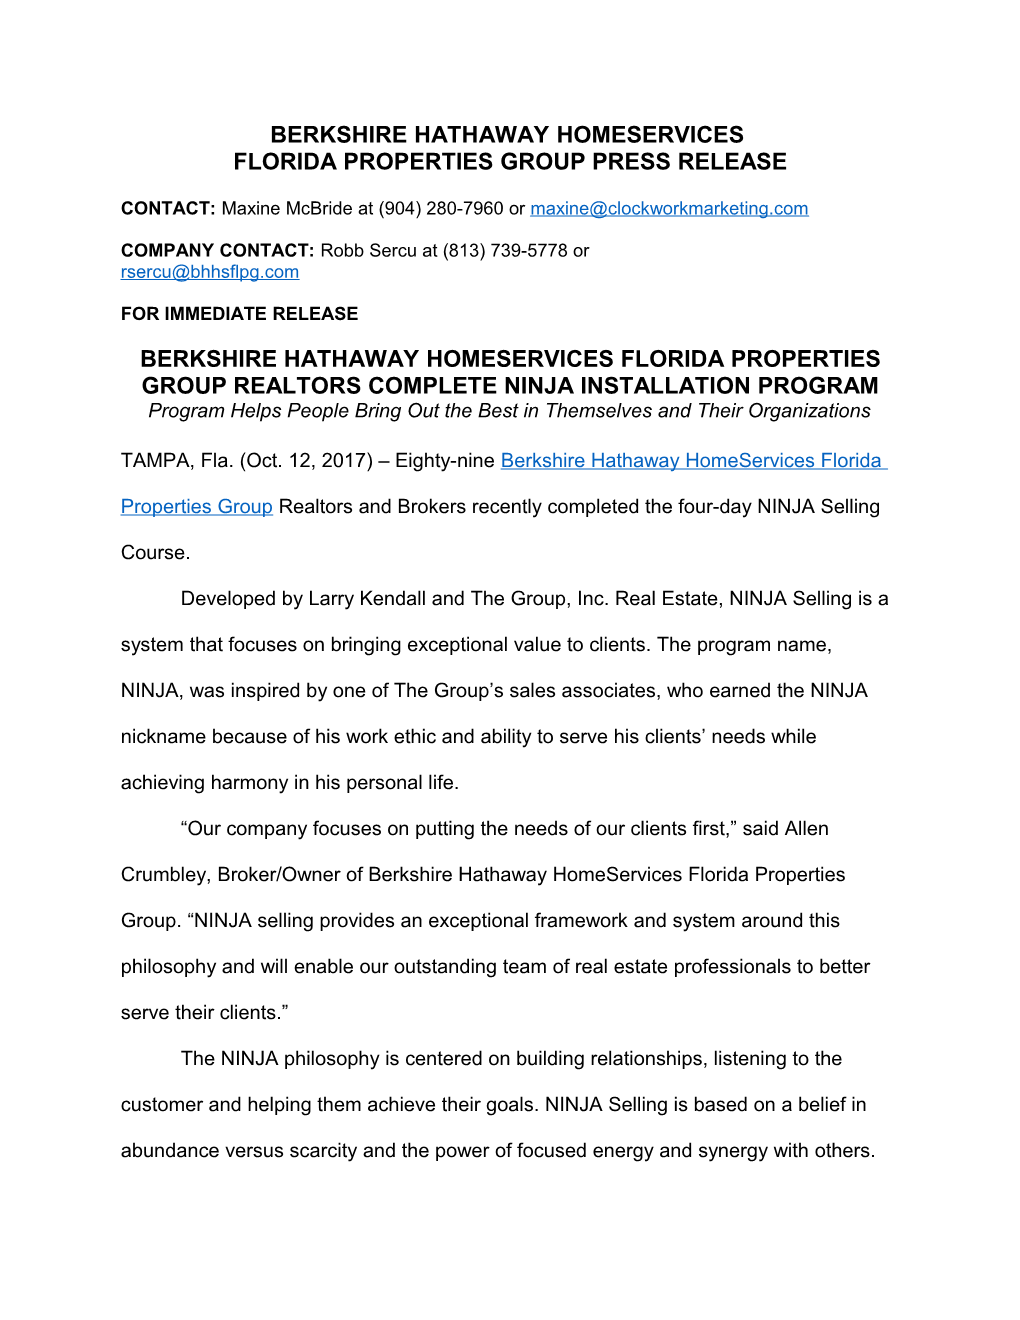 Florida Properties Group Press Release